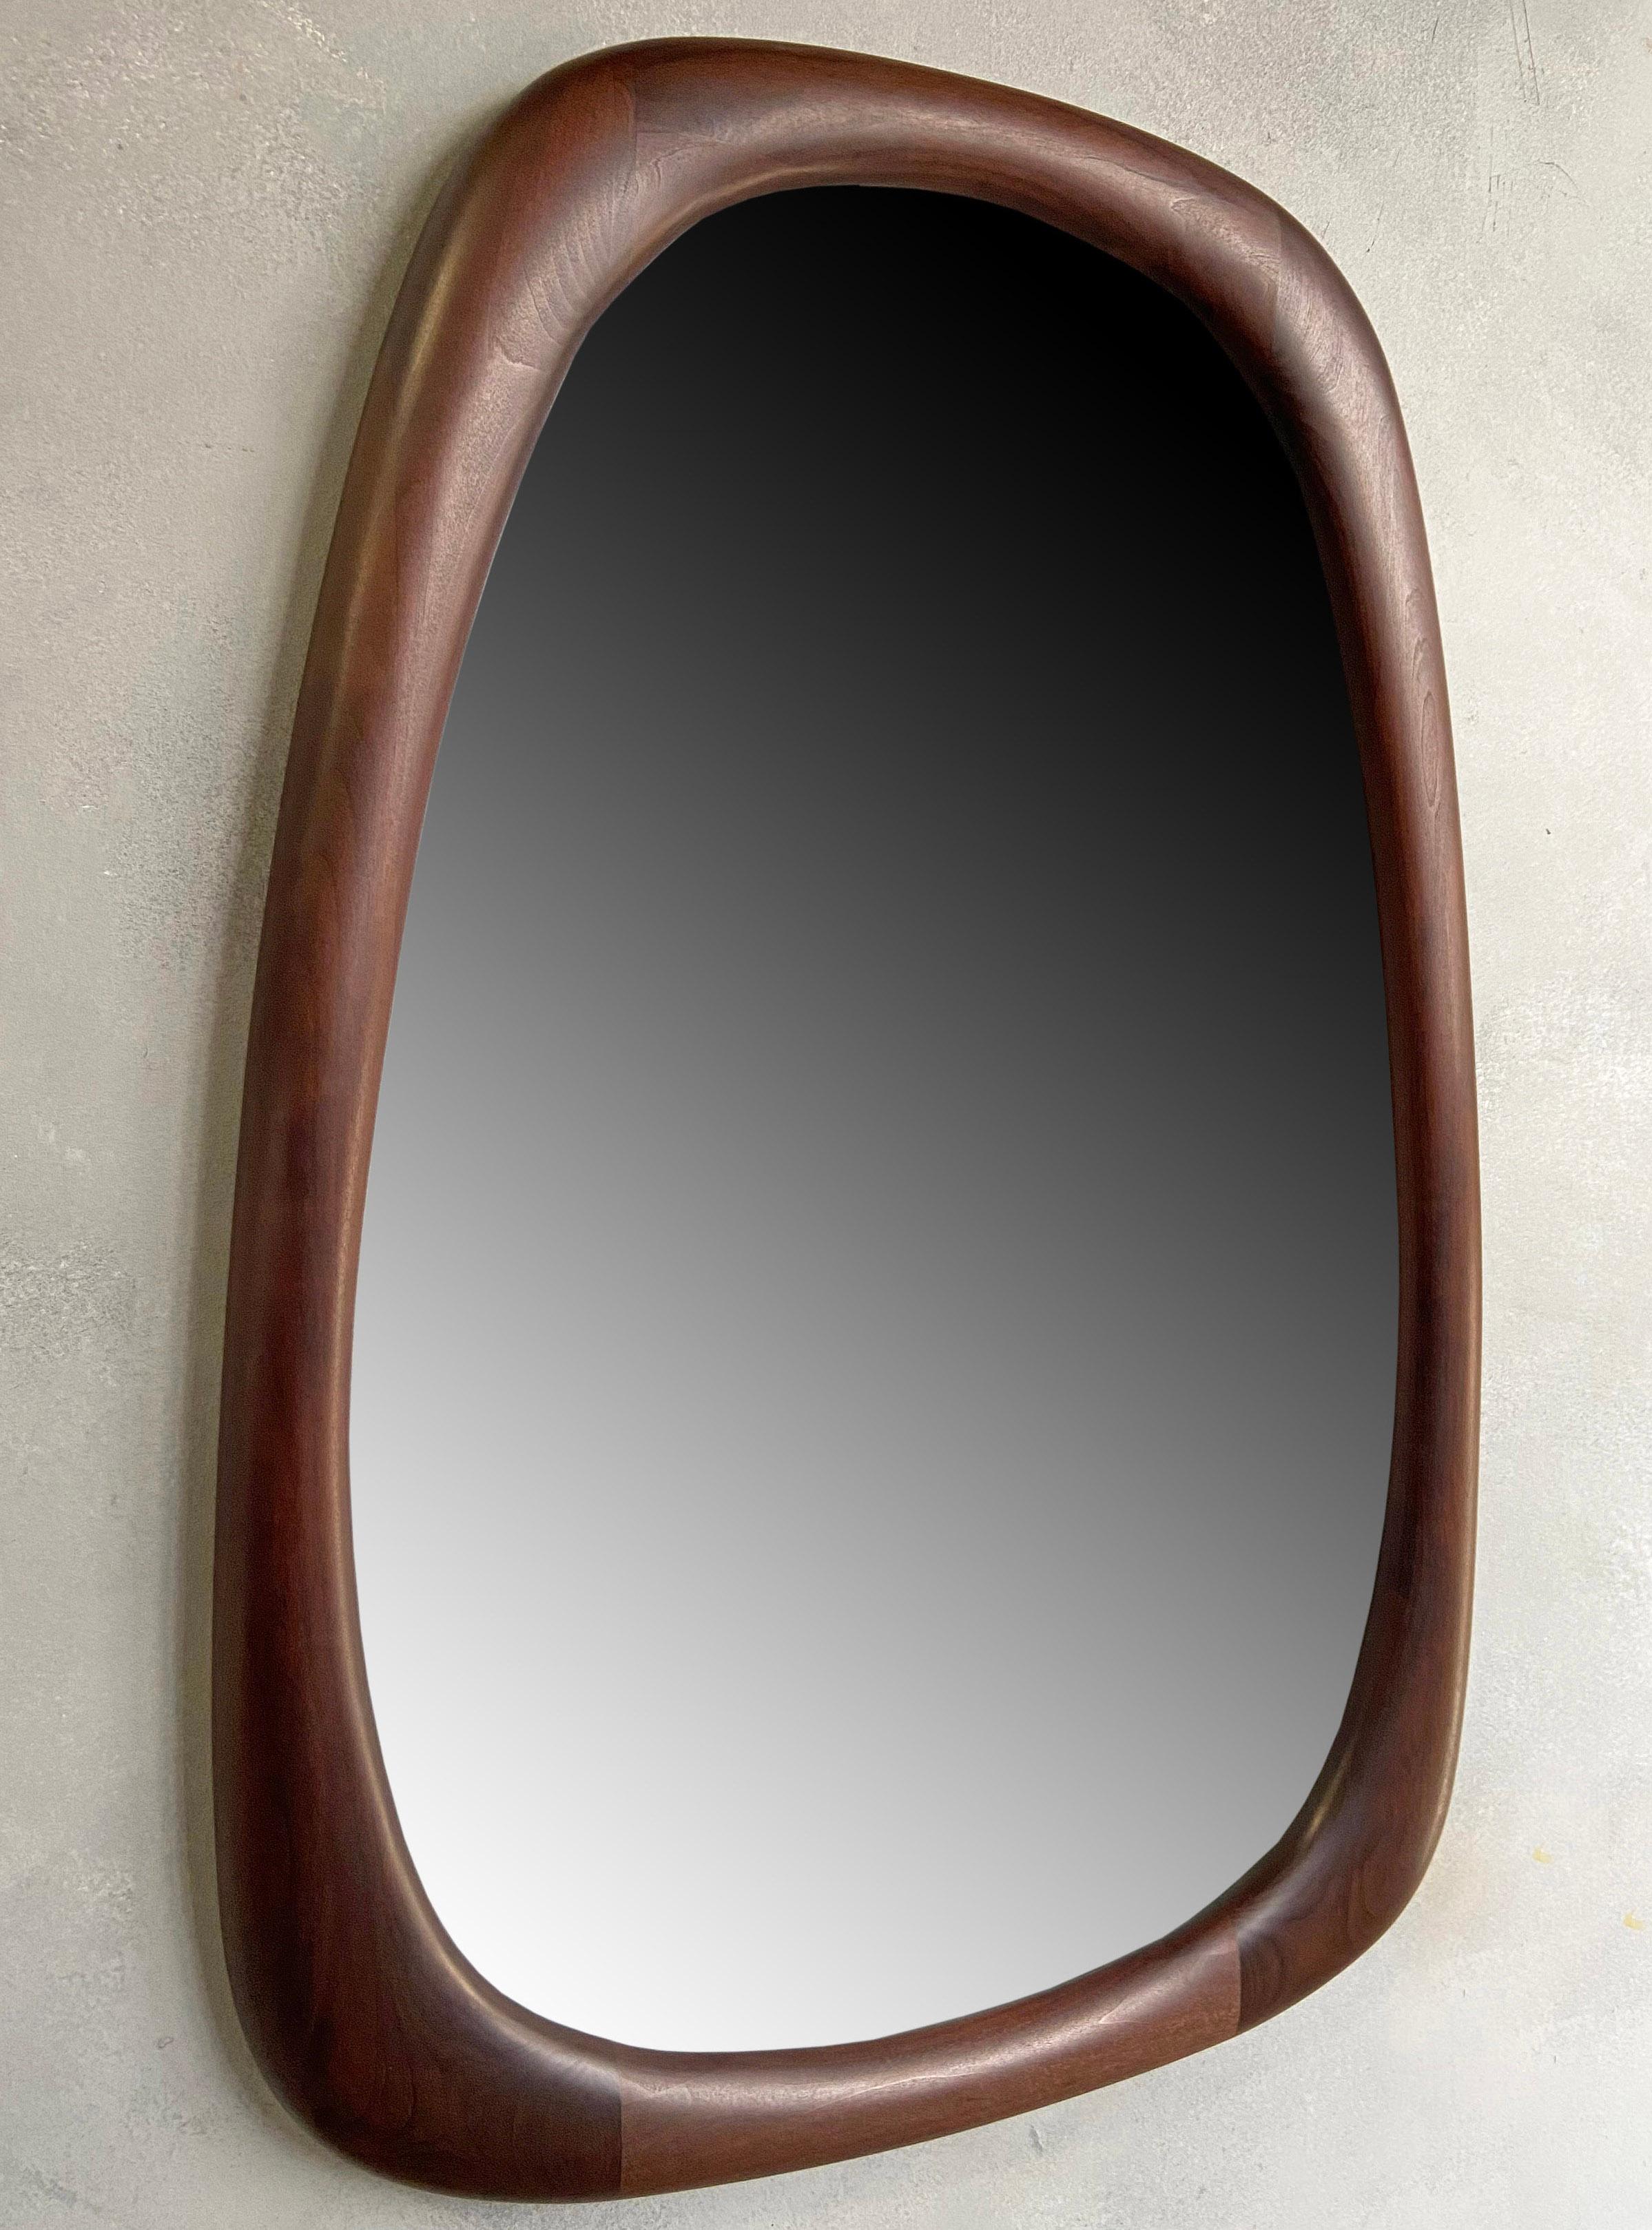 Stunning Mid-Century American Modern Craft Mirror by Dean Santner For Sale 4